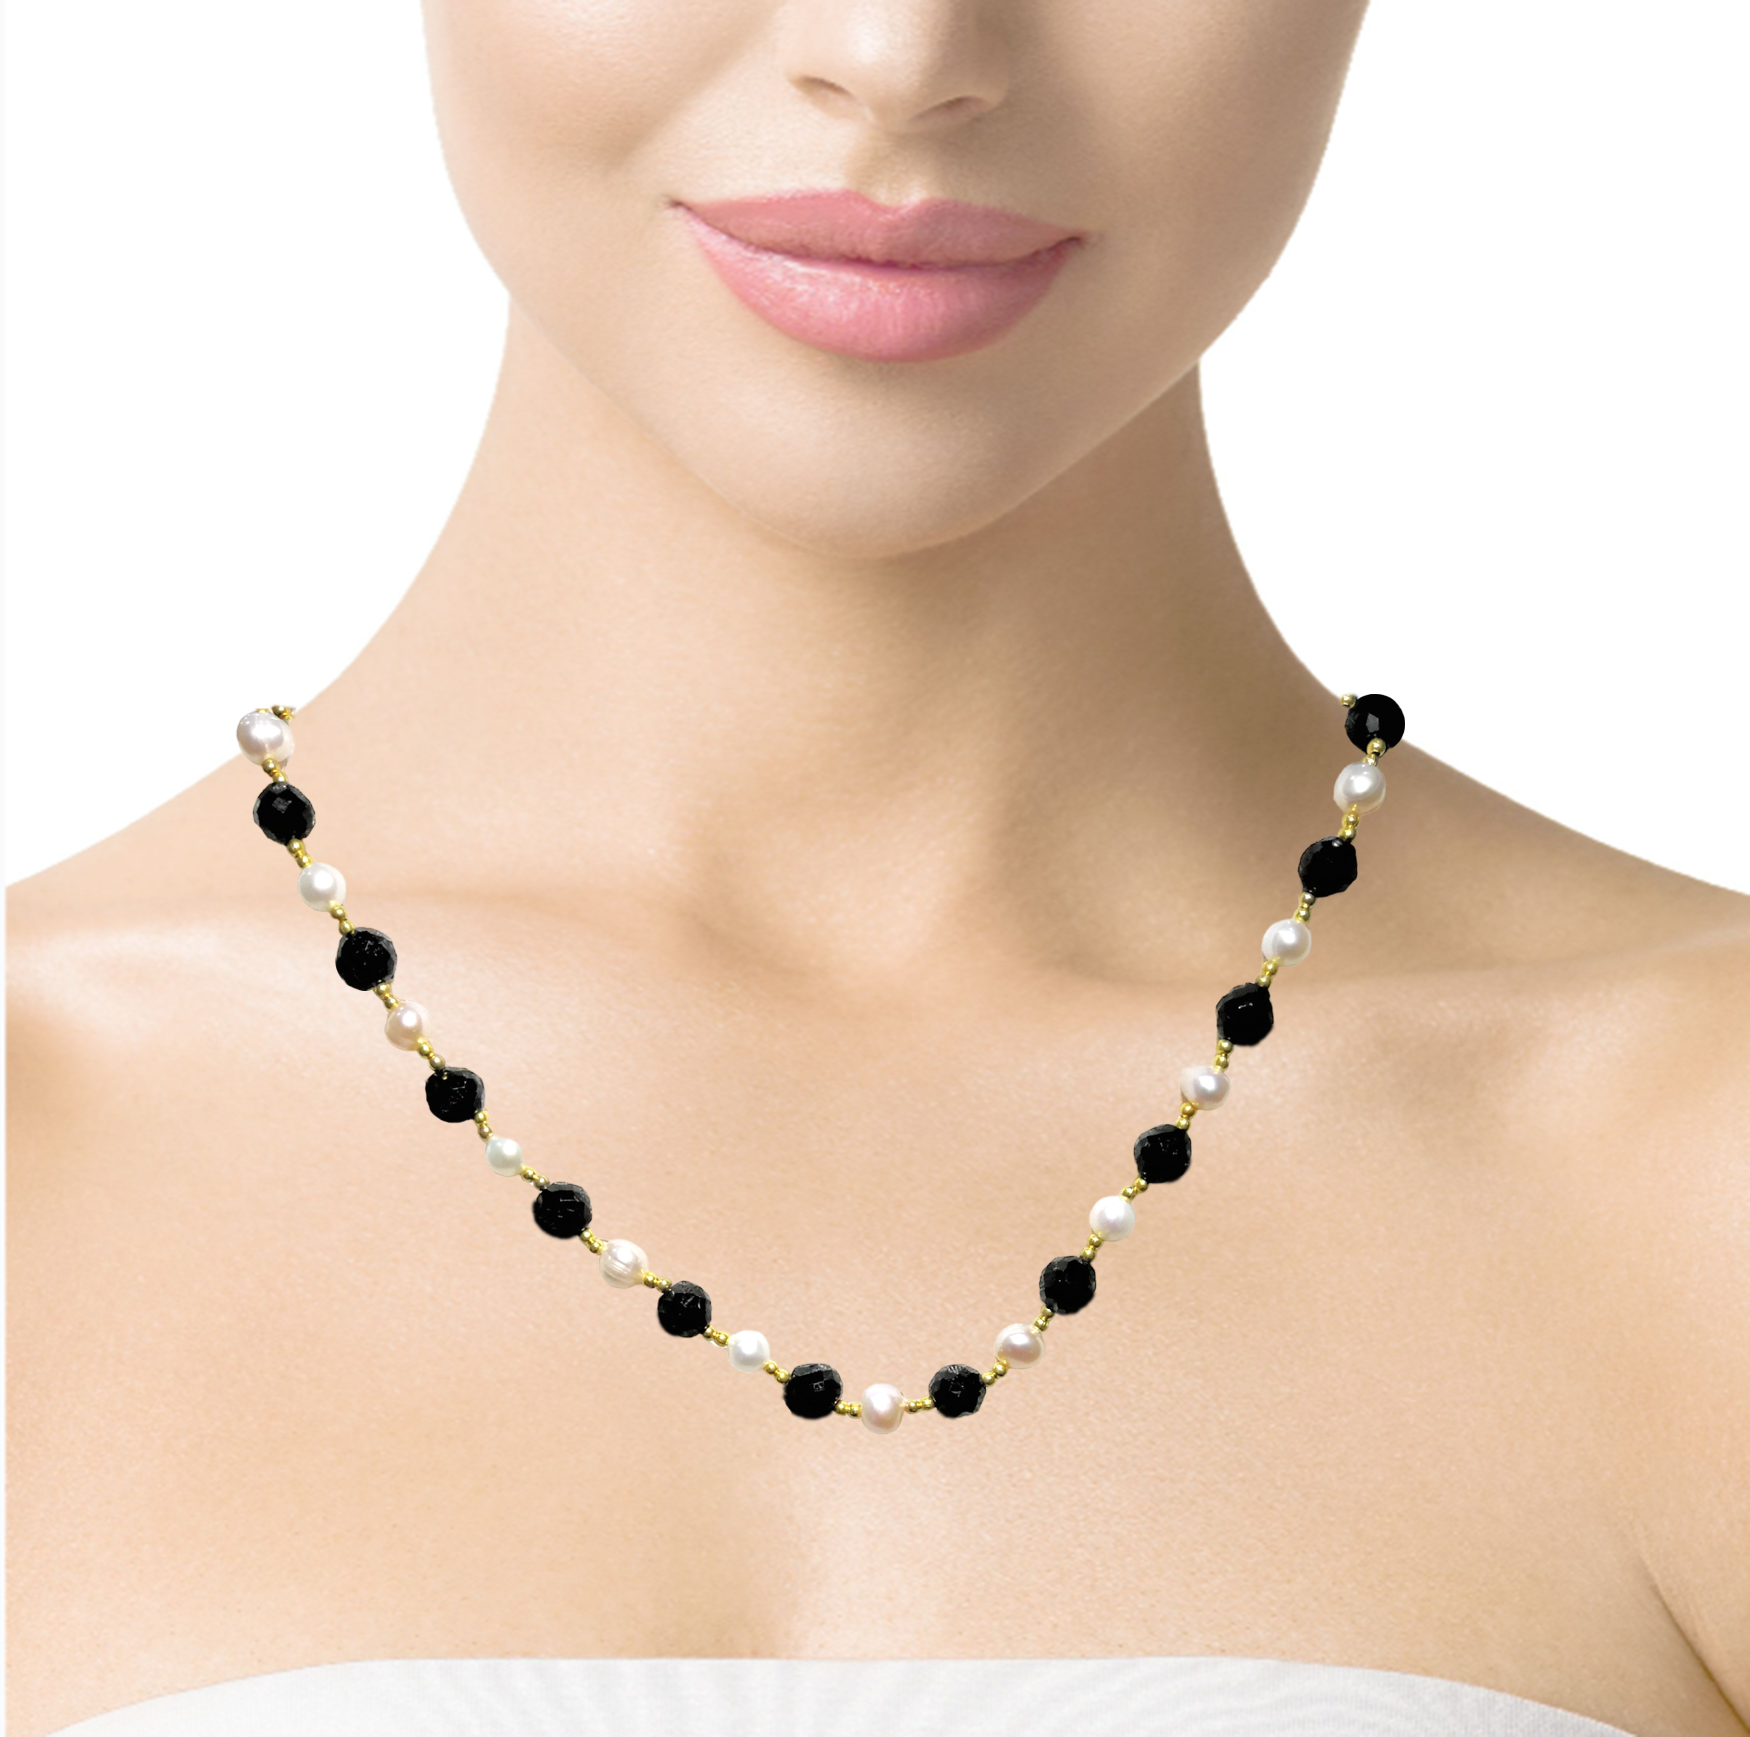 Natural Handmade Necklace 16"-18" Garnet Pearls Gemstone Beads Neckwear